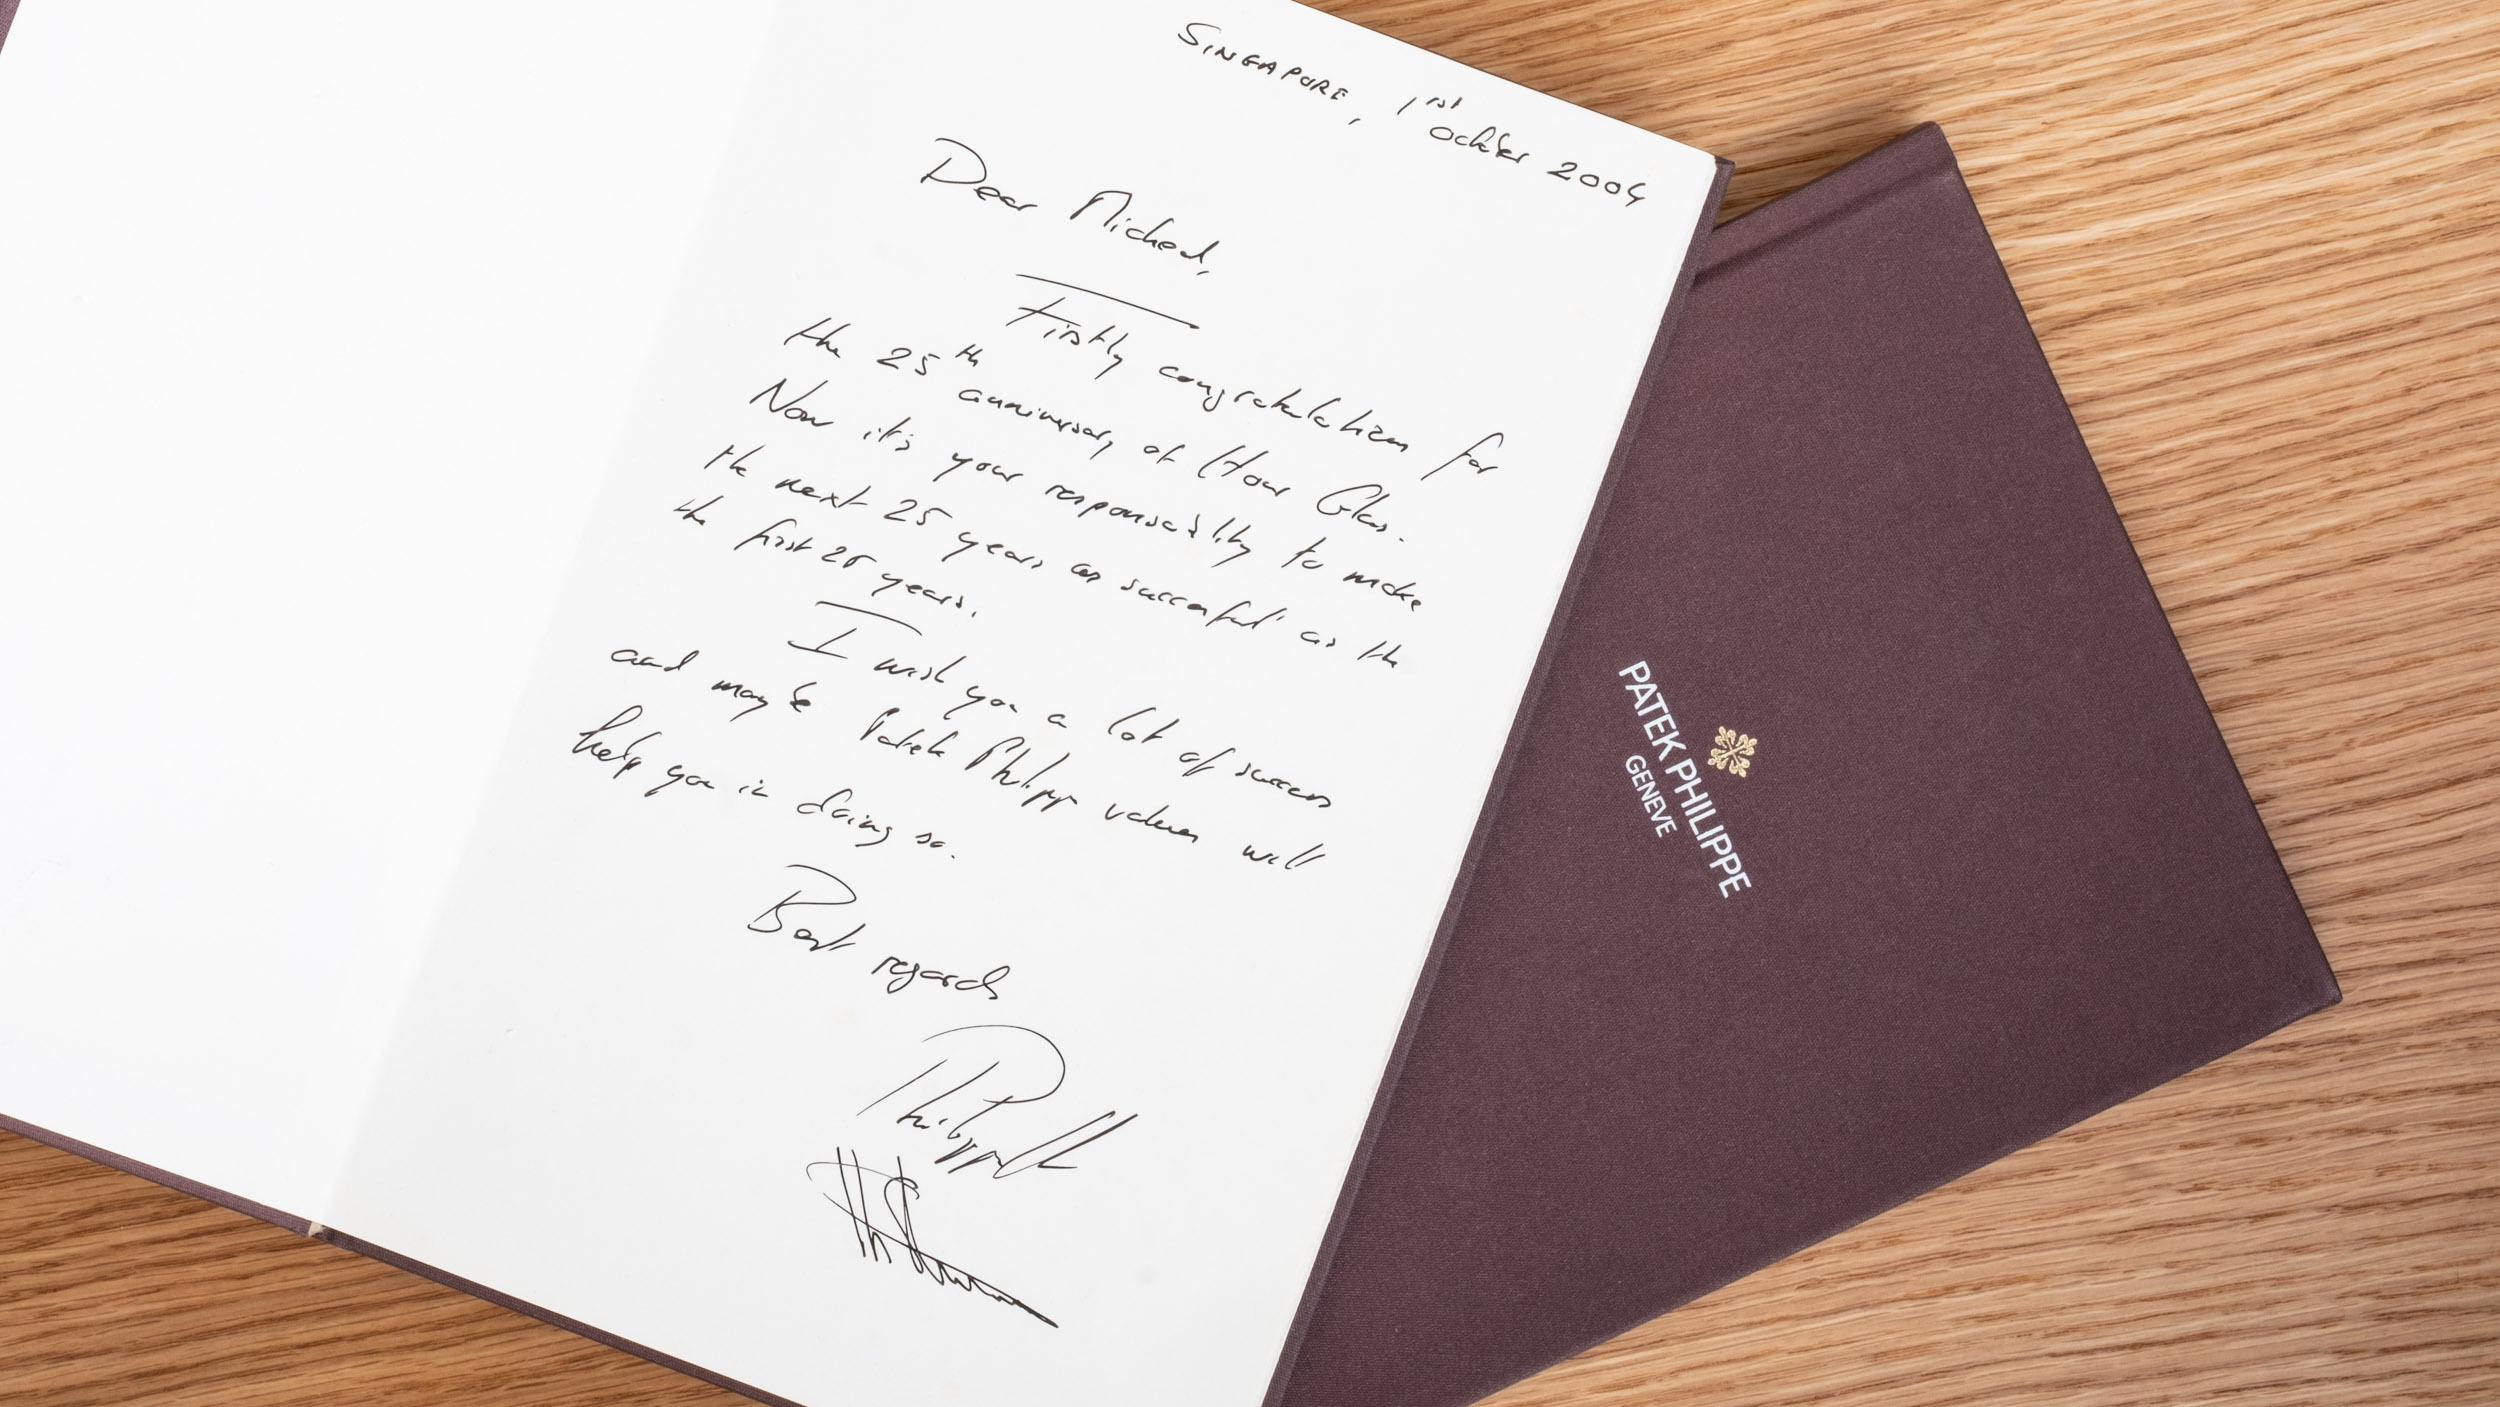 Philippe & Thierry Stern’s note to Michael Tay on THG 25th Anniversary มร.ฟิลิปป์ และ มร.เทียร์รี สเติร์น ถึง มร.ไมเคิล เทย์ ในโอกาสครบรอบ 25 ปีของ The Hour Glass